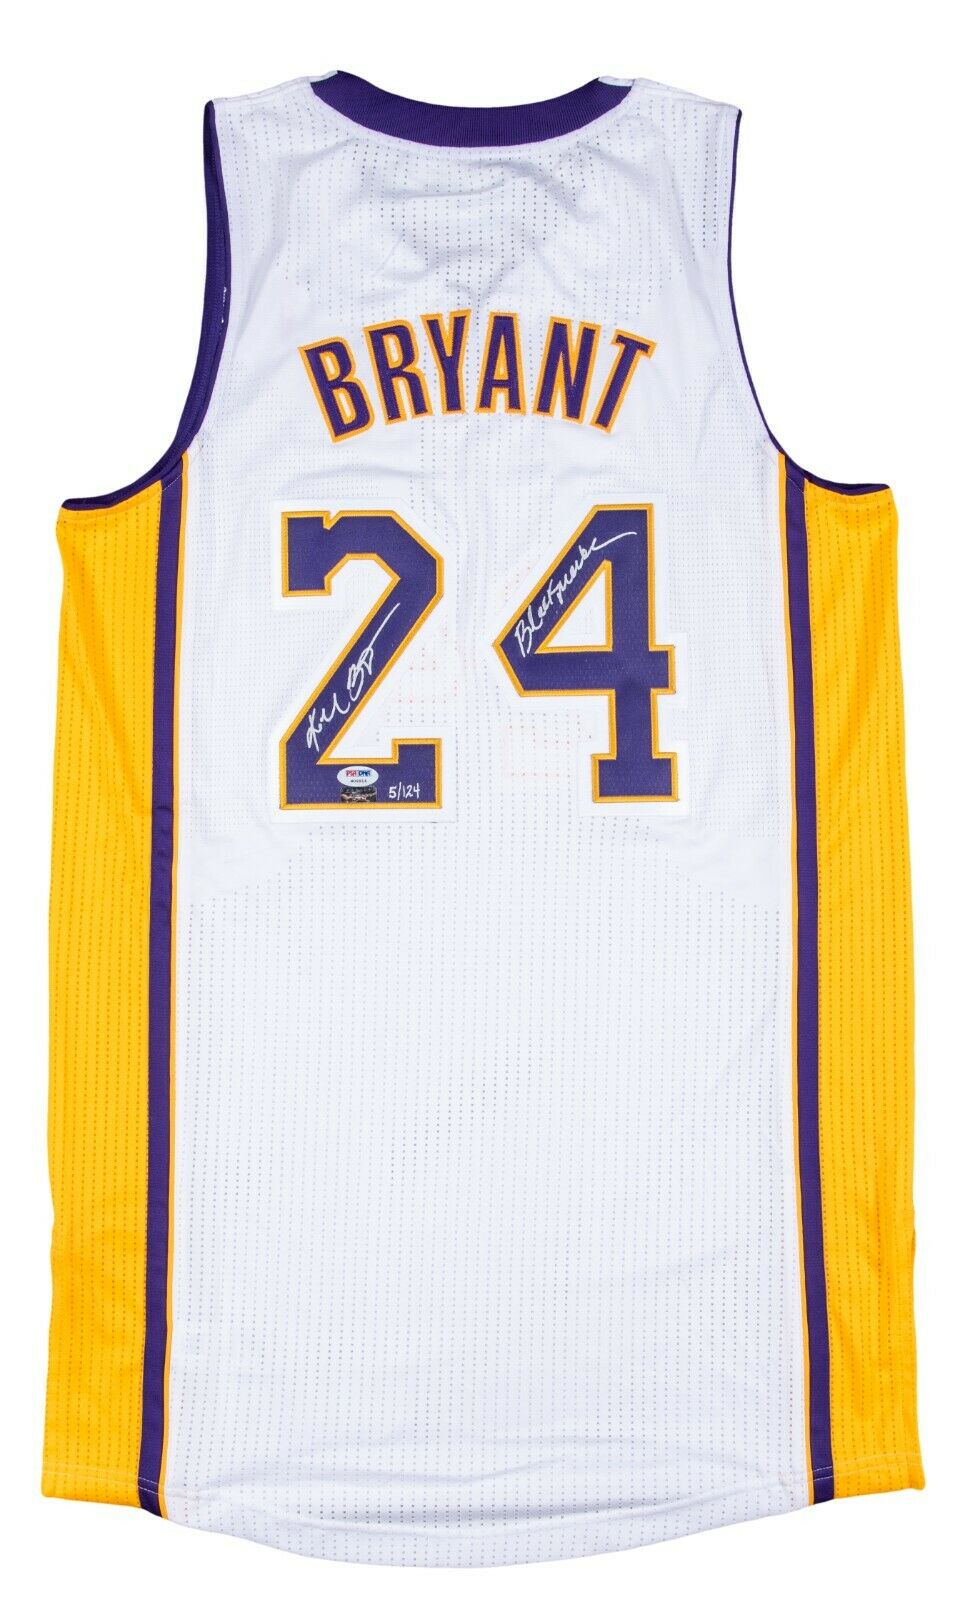 Kobe Bryant Black Mamba Jersey 